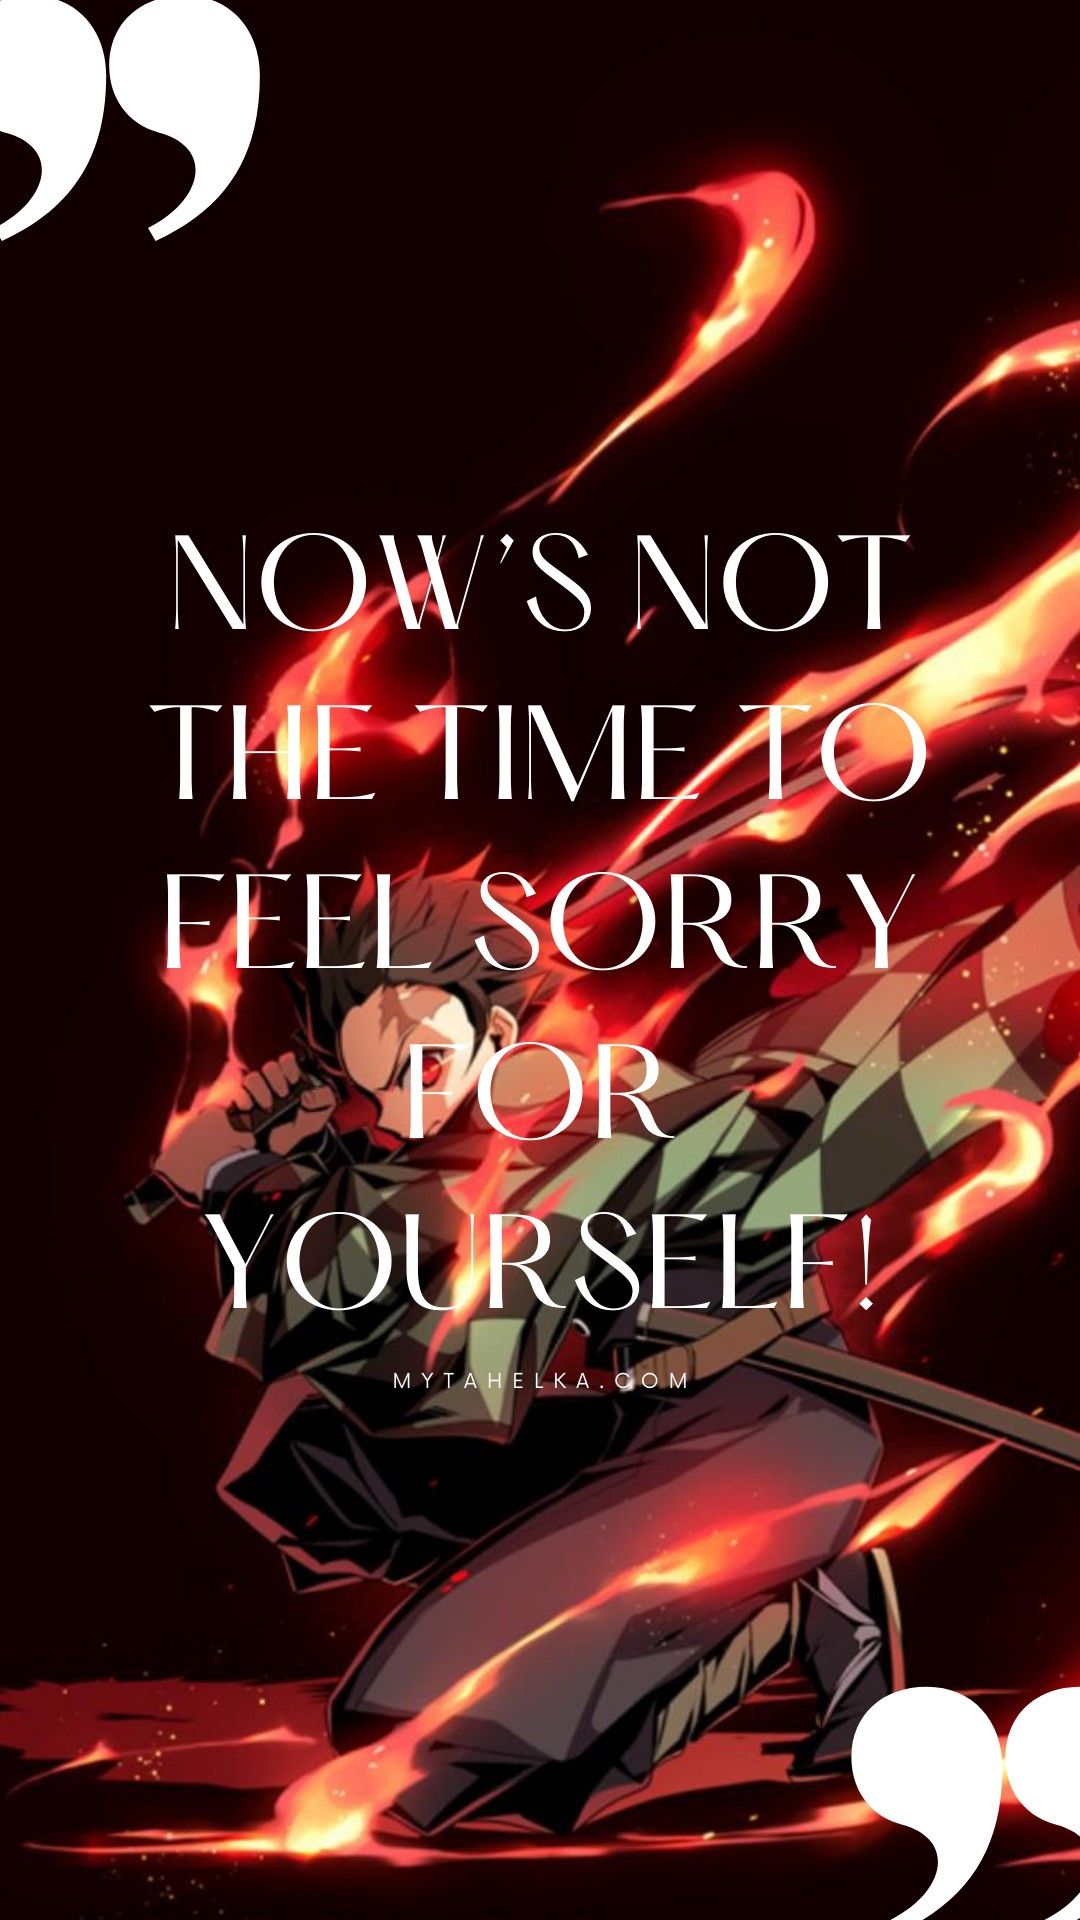 Tanjiro Demon slayer Anime quote wallpaper. Anime quotes, Wallpaper quotes, Anime